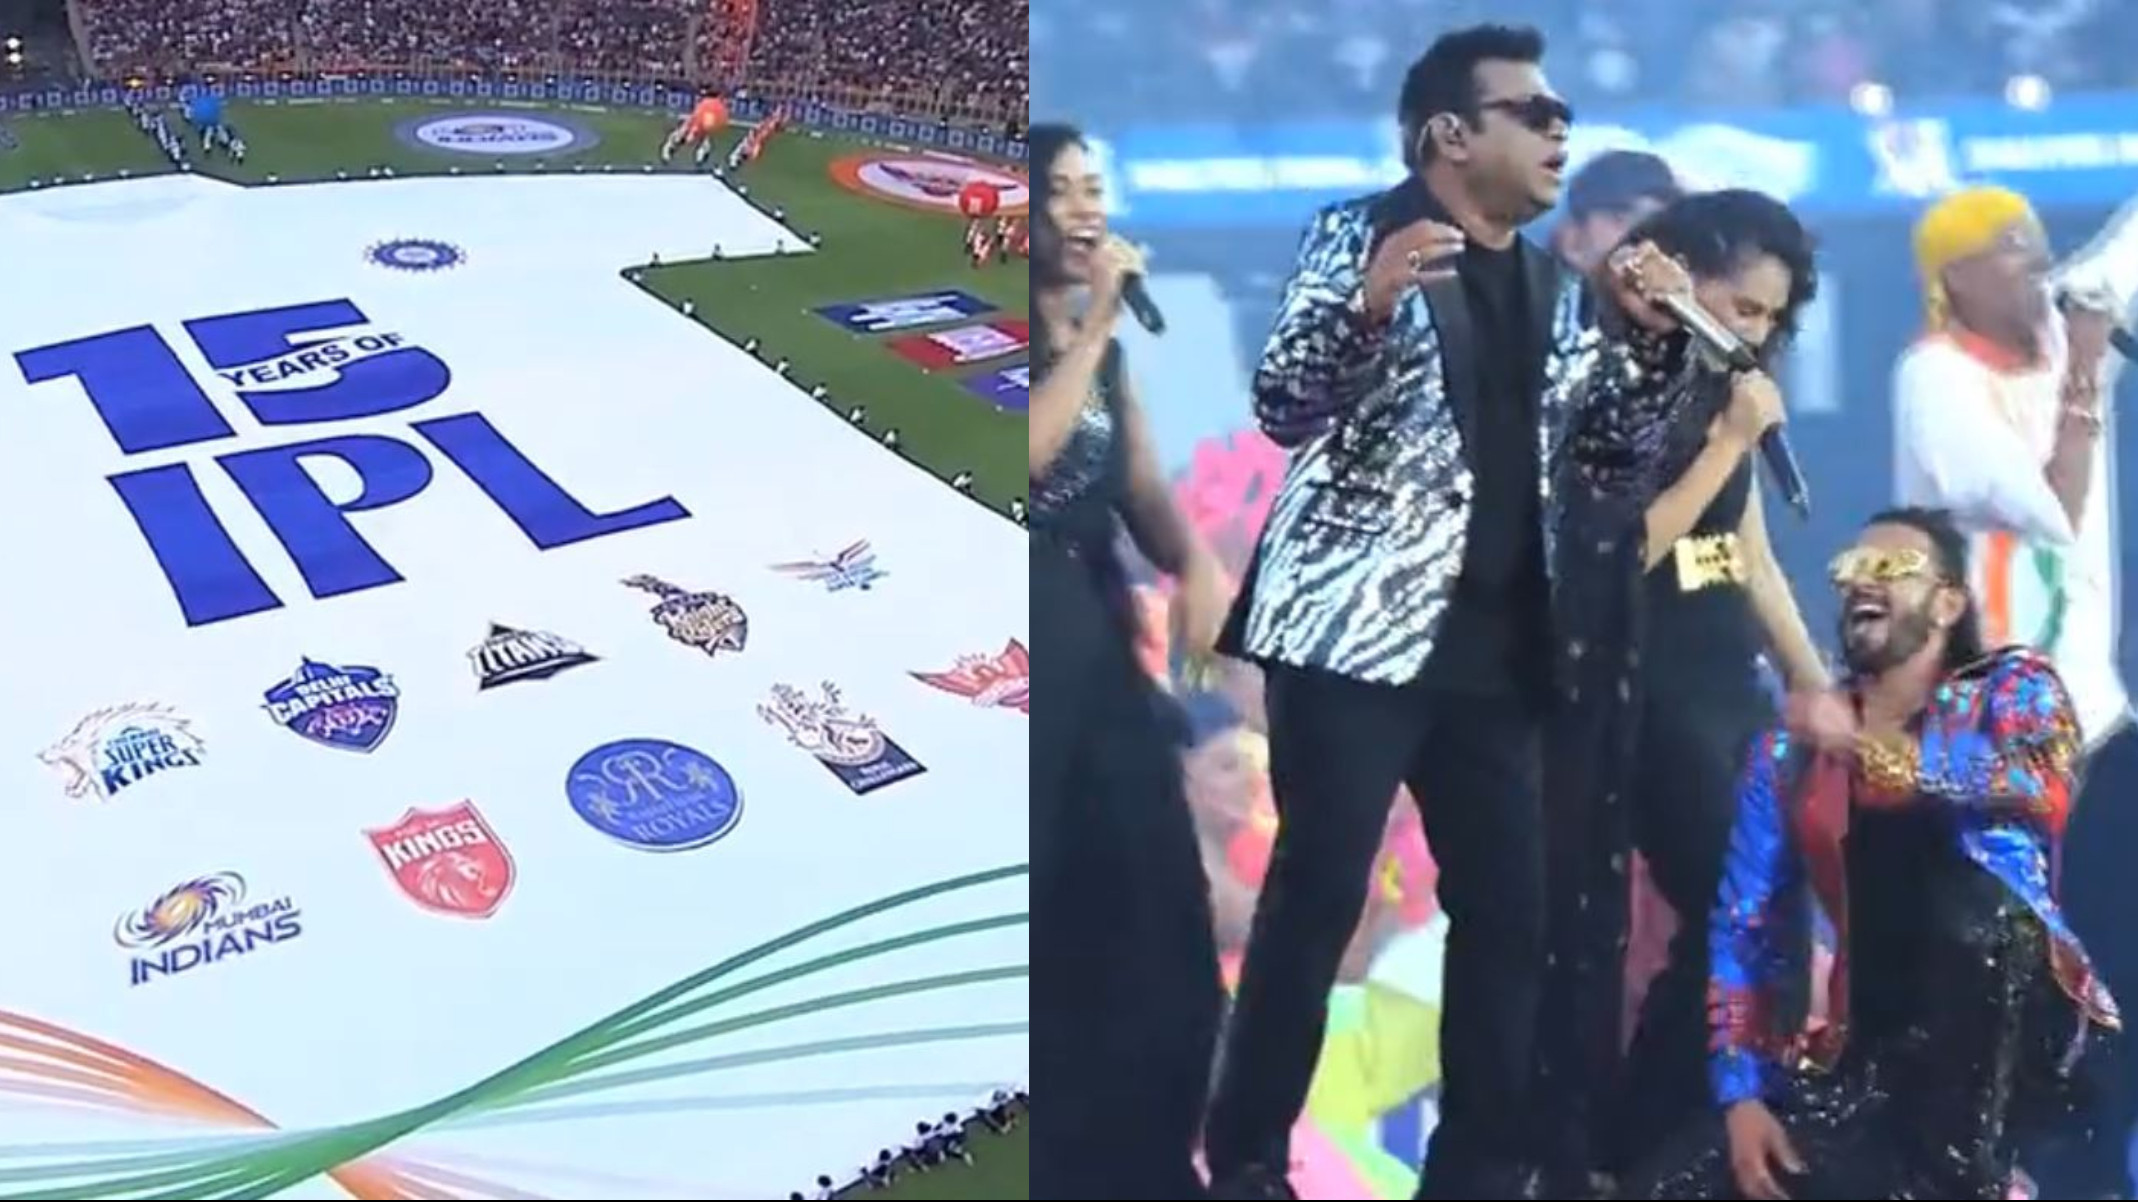 IPL 2022: WATCH- IPL creates Guinness world record for largest jersey; AR Rahman, Ranveer Singh enthrall crowd